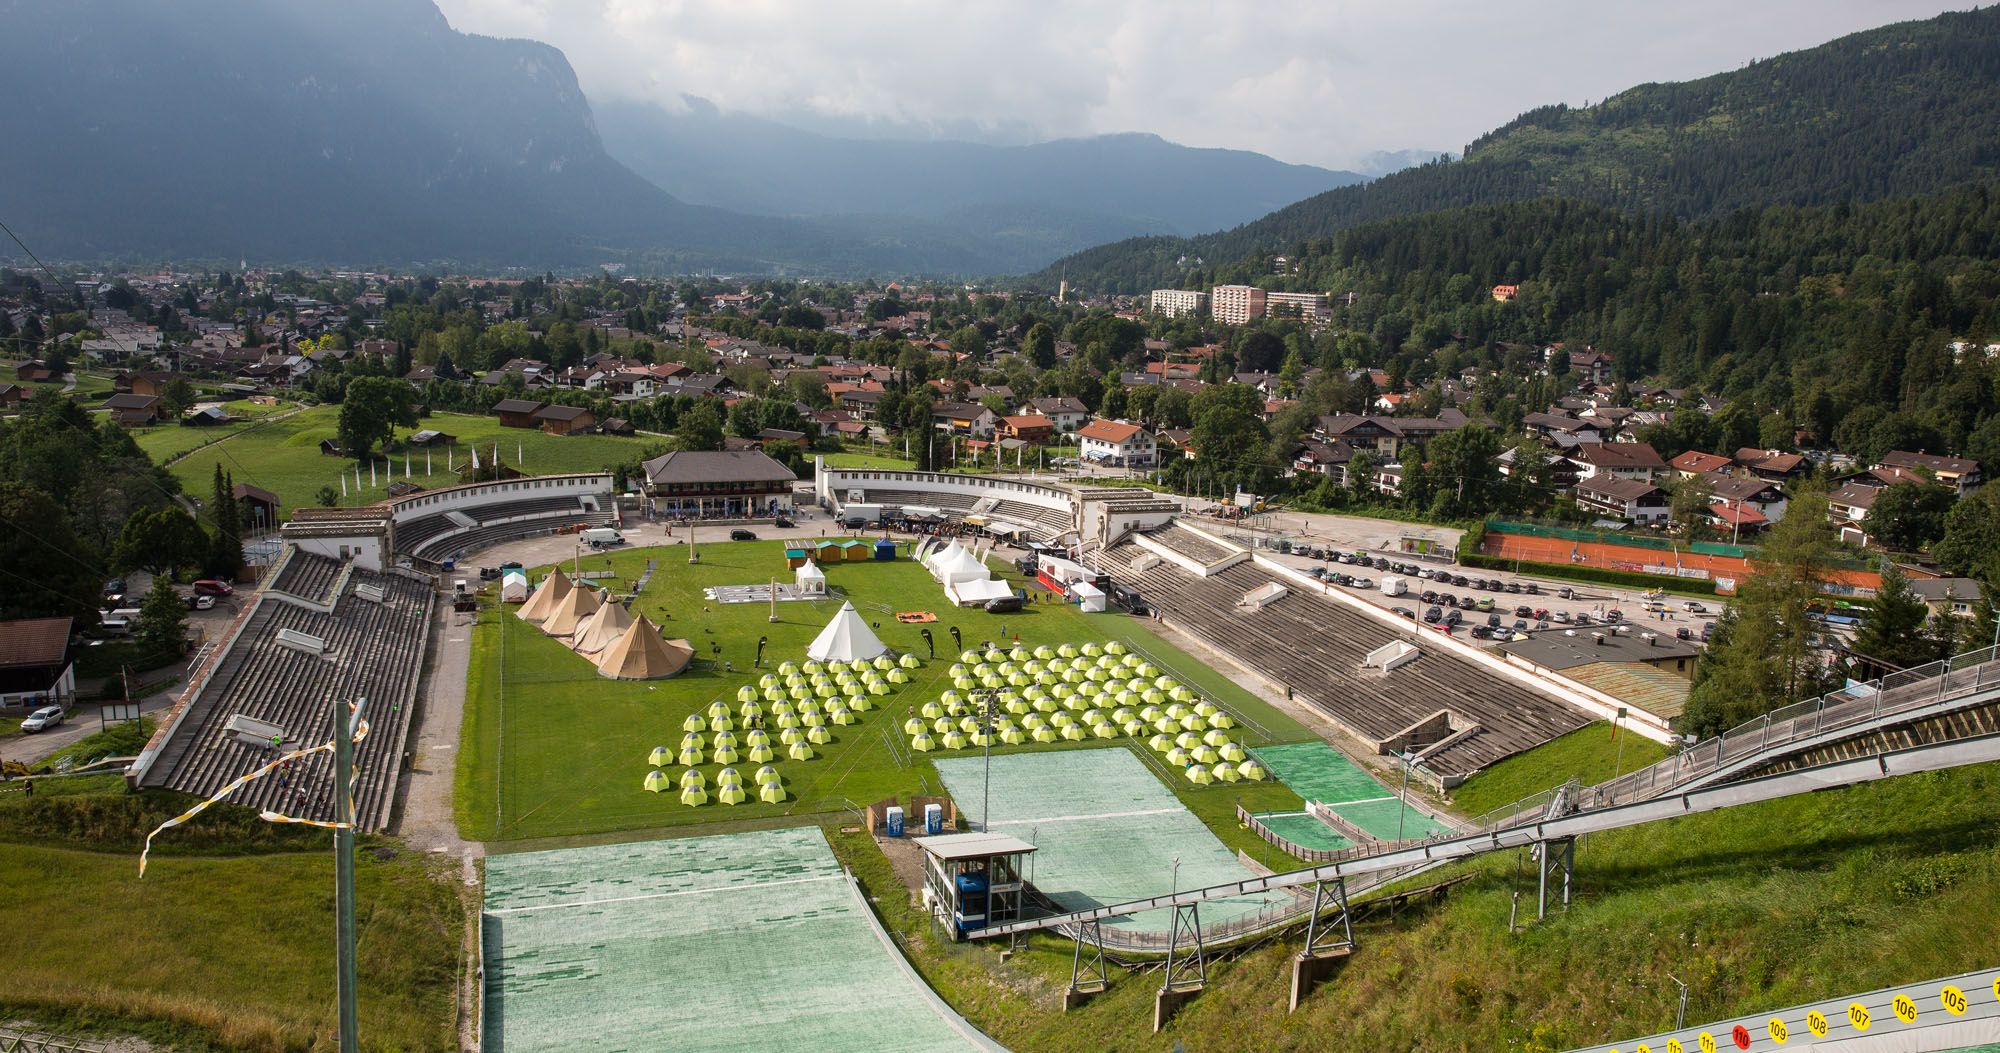 Featured image for “How We Spent One Week in Garmisch-Partenkirchen, Germany”